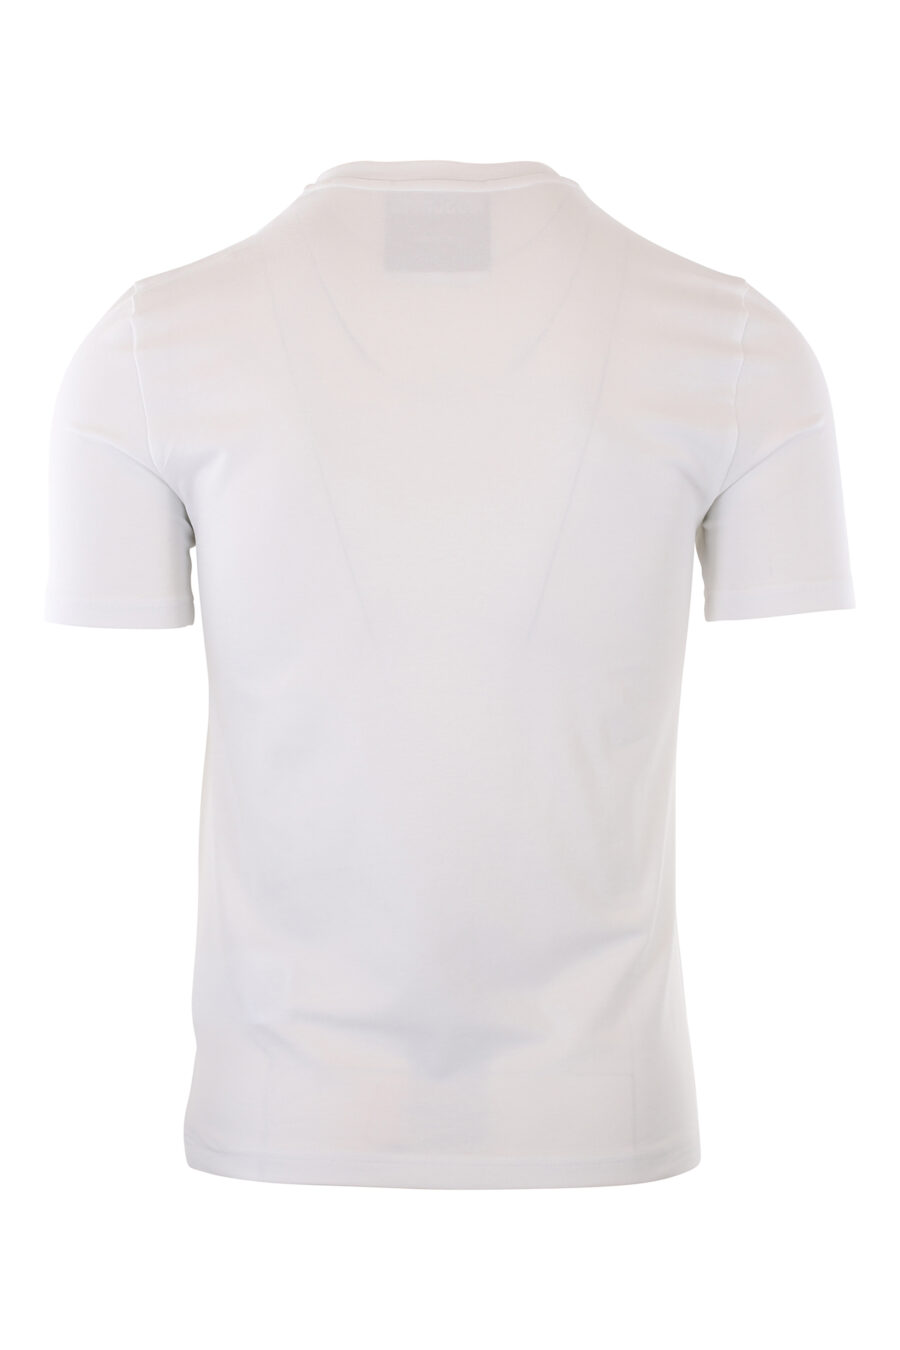 T-shirt branca com logótipo duplo "smiley" maxi - IMG 2428